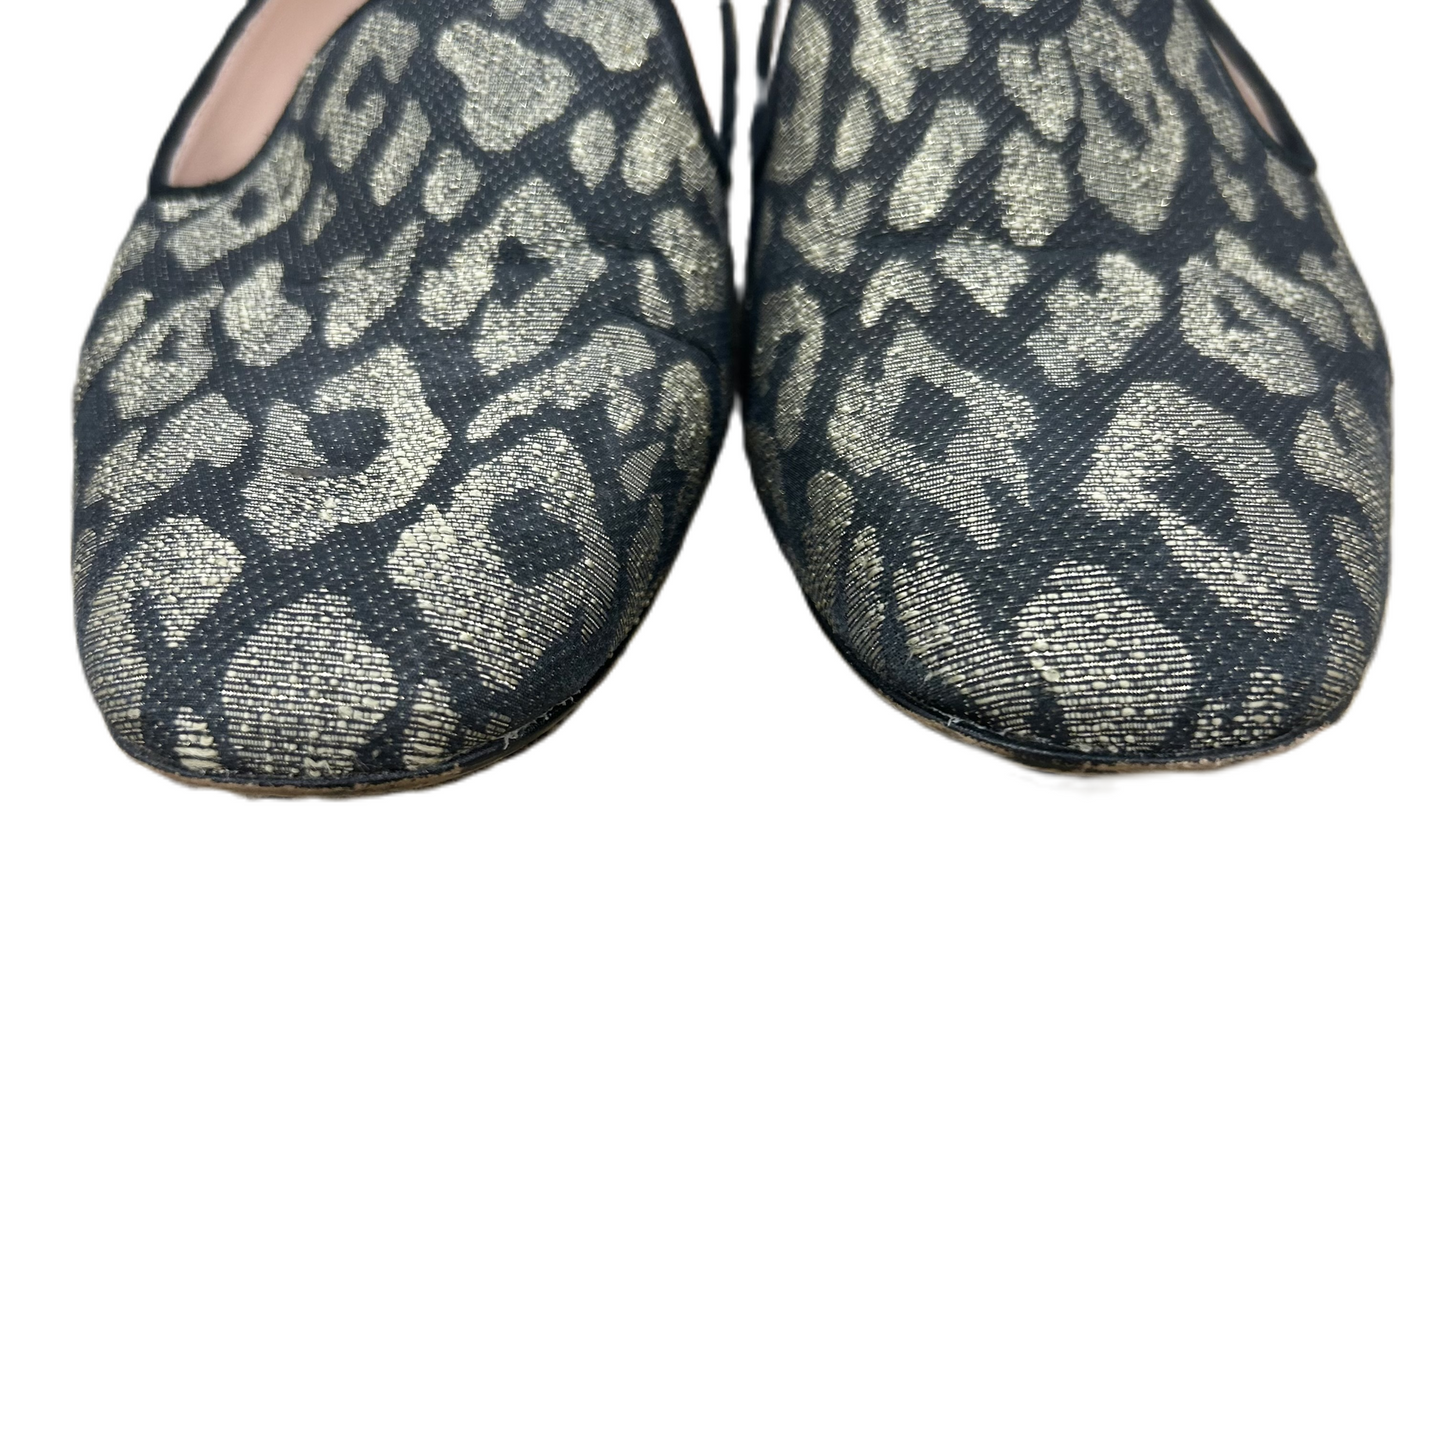 Leopard Print Shoes Flats By J. Crew, Size: 7